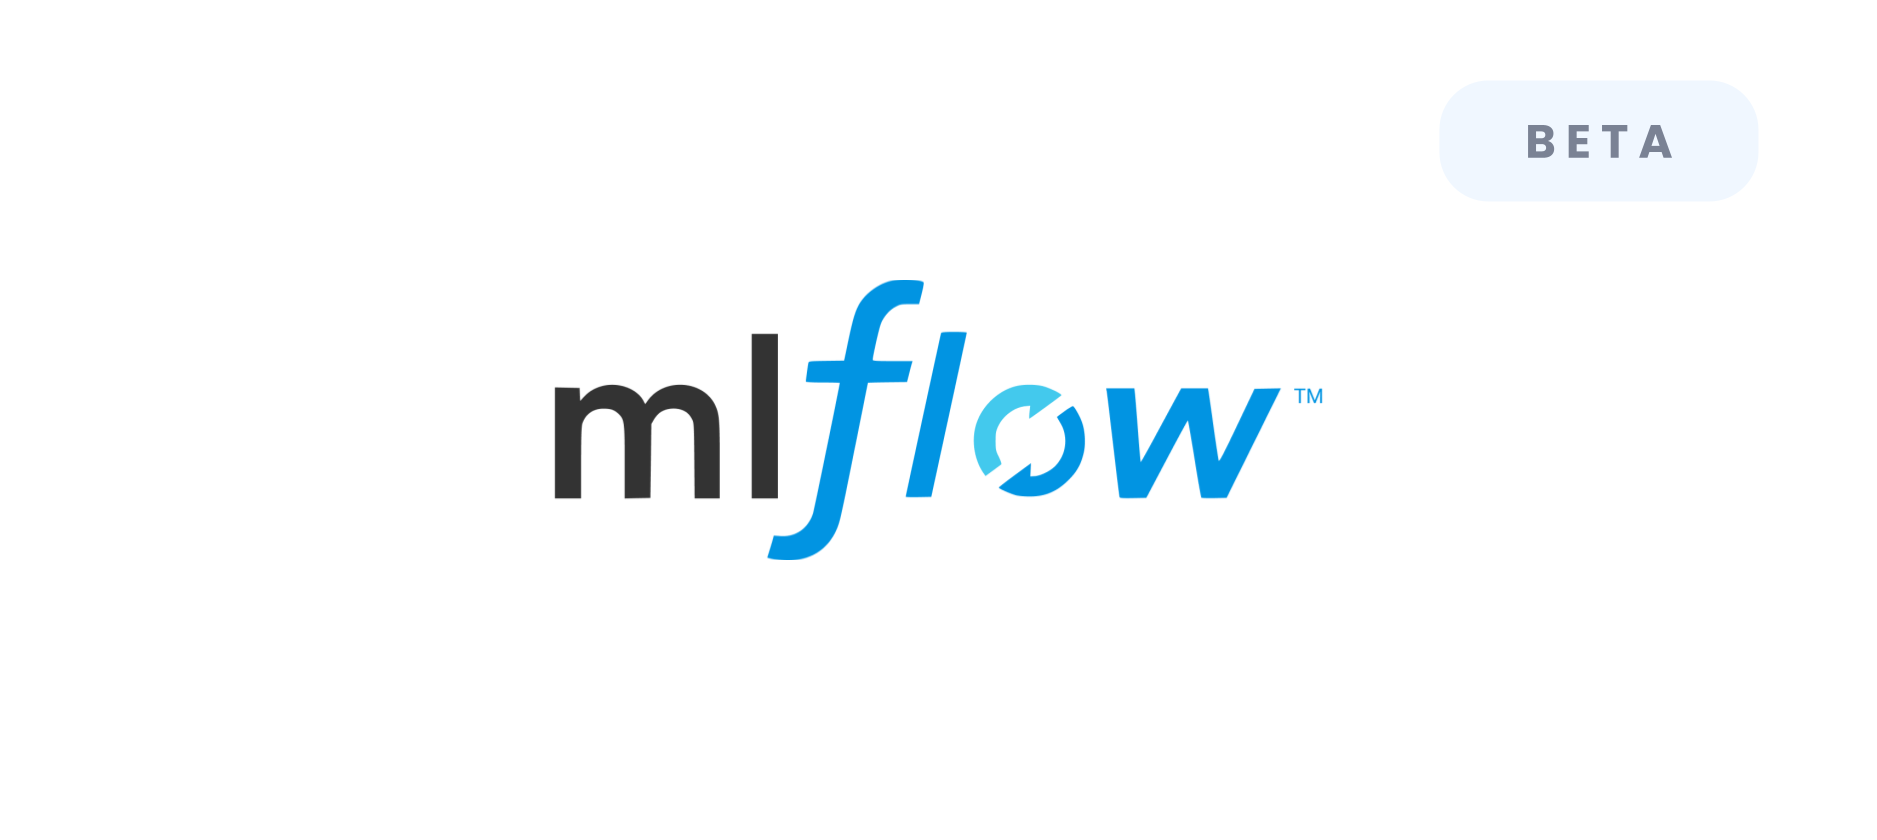 Machine Learning - mlflow - Beta